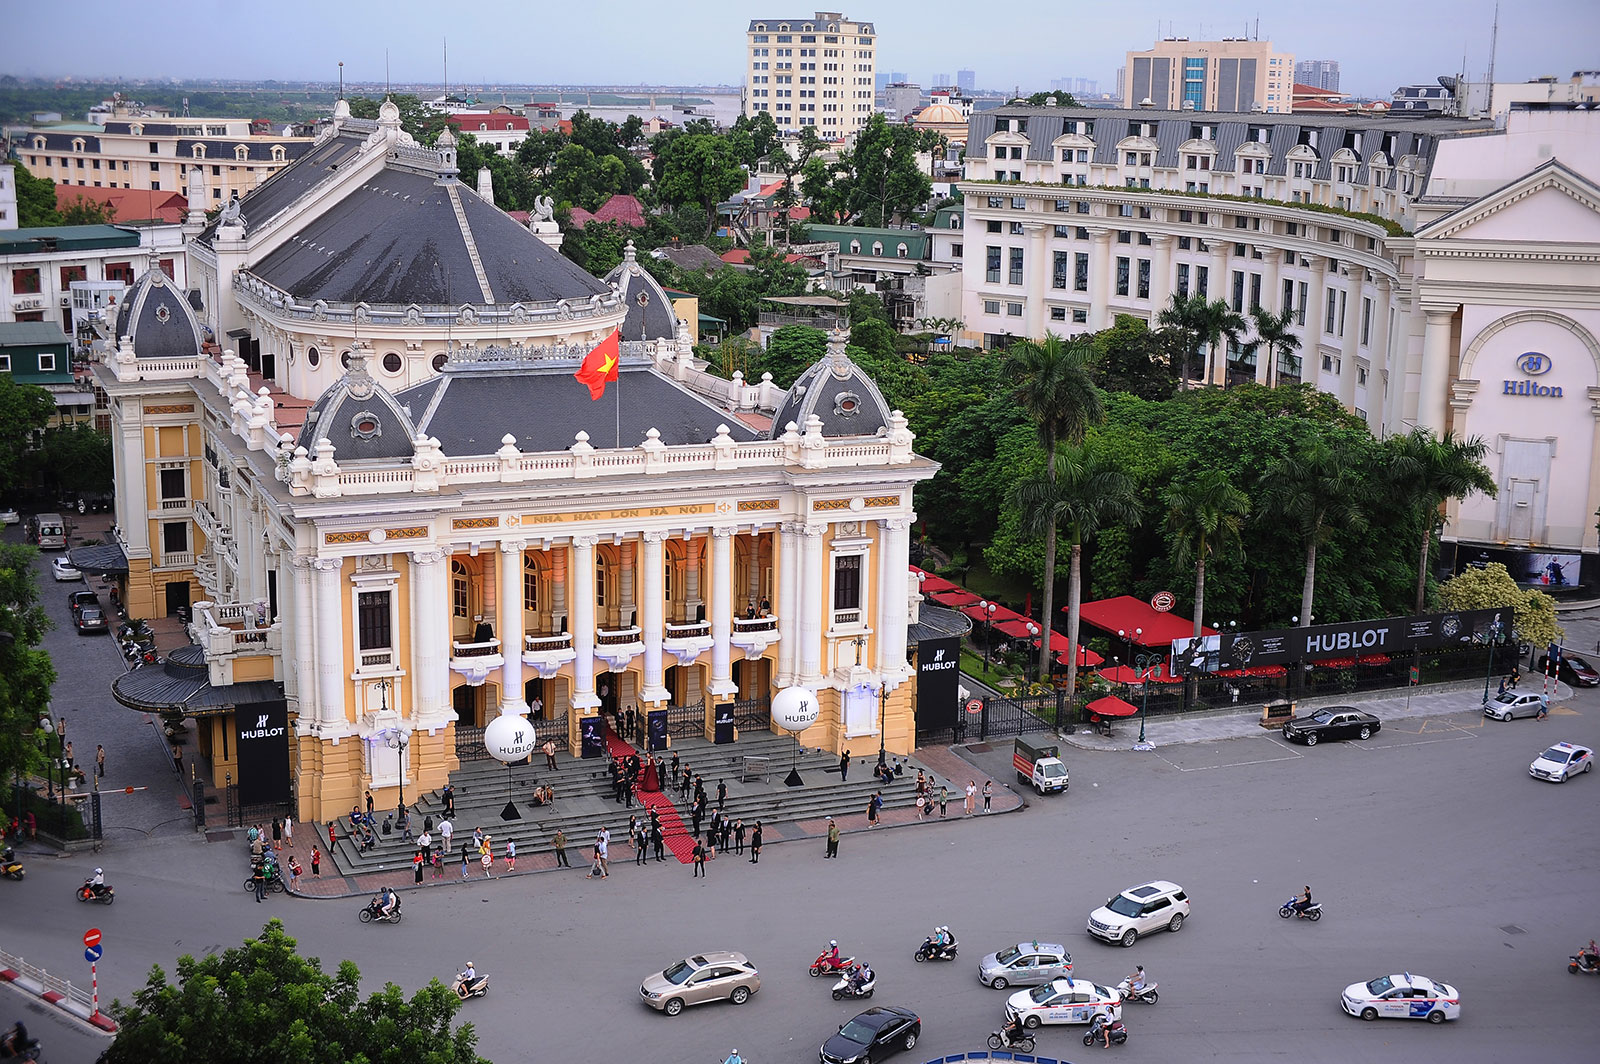 Hublot Hanoi Opera House 2